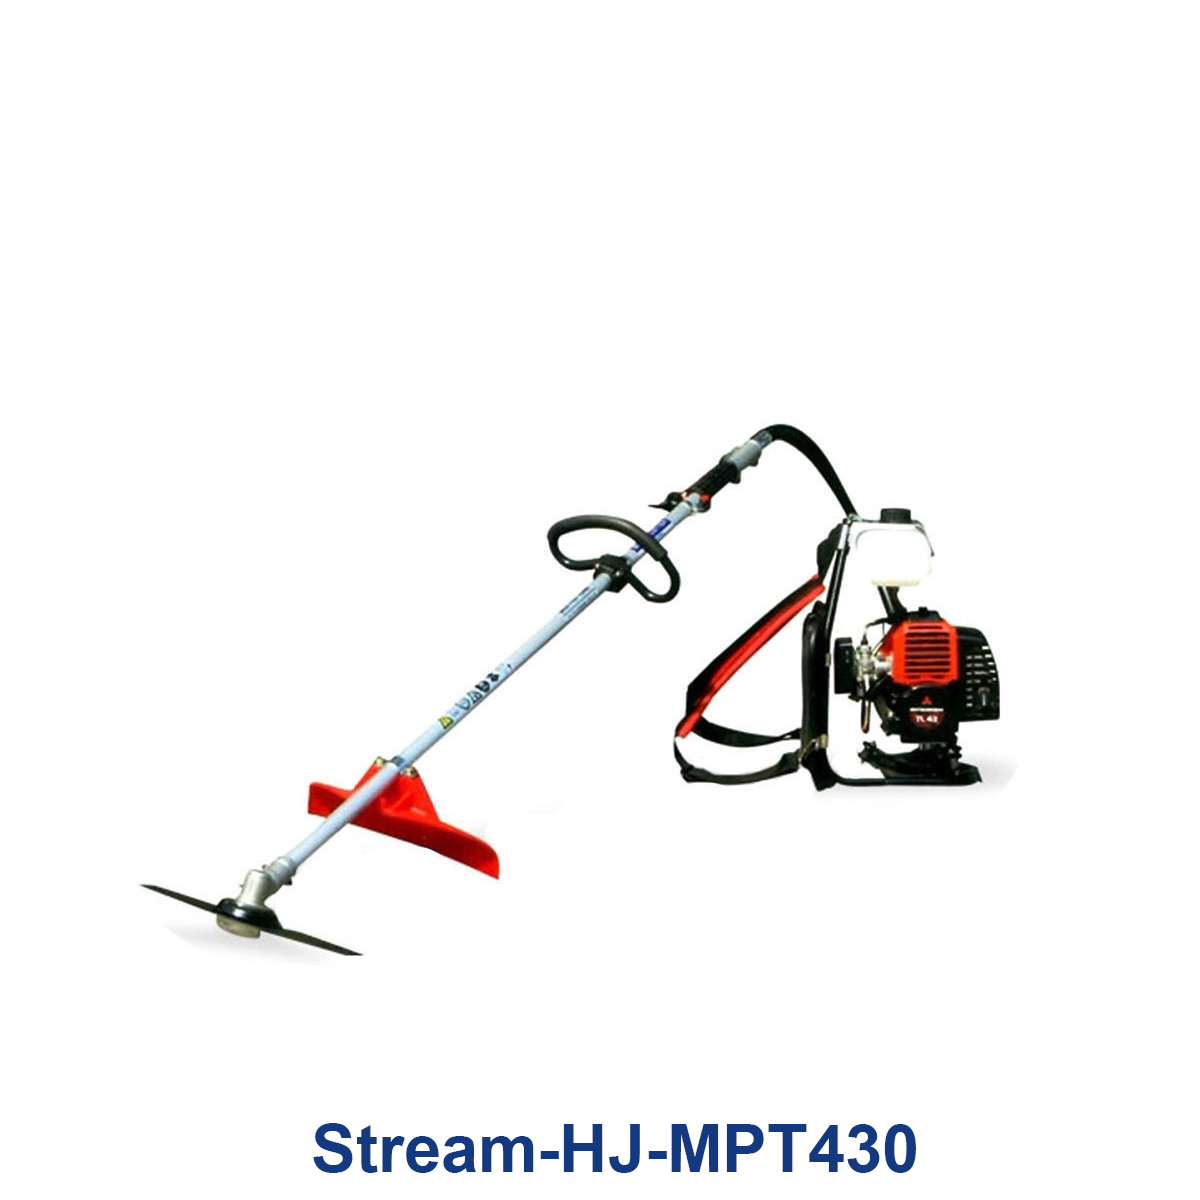 Stream-HJ-MPT430